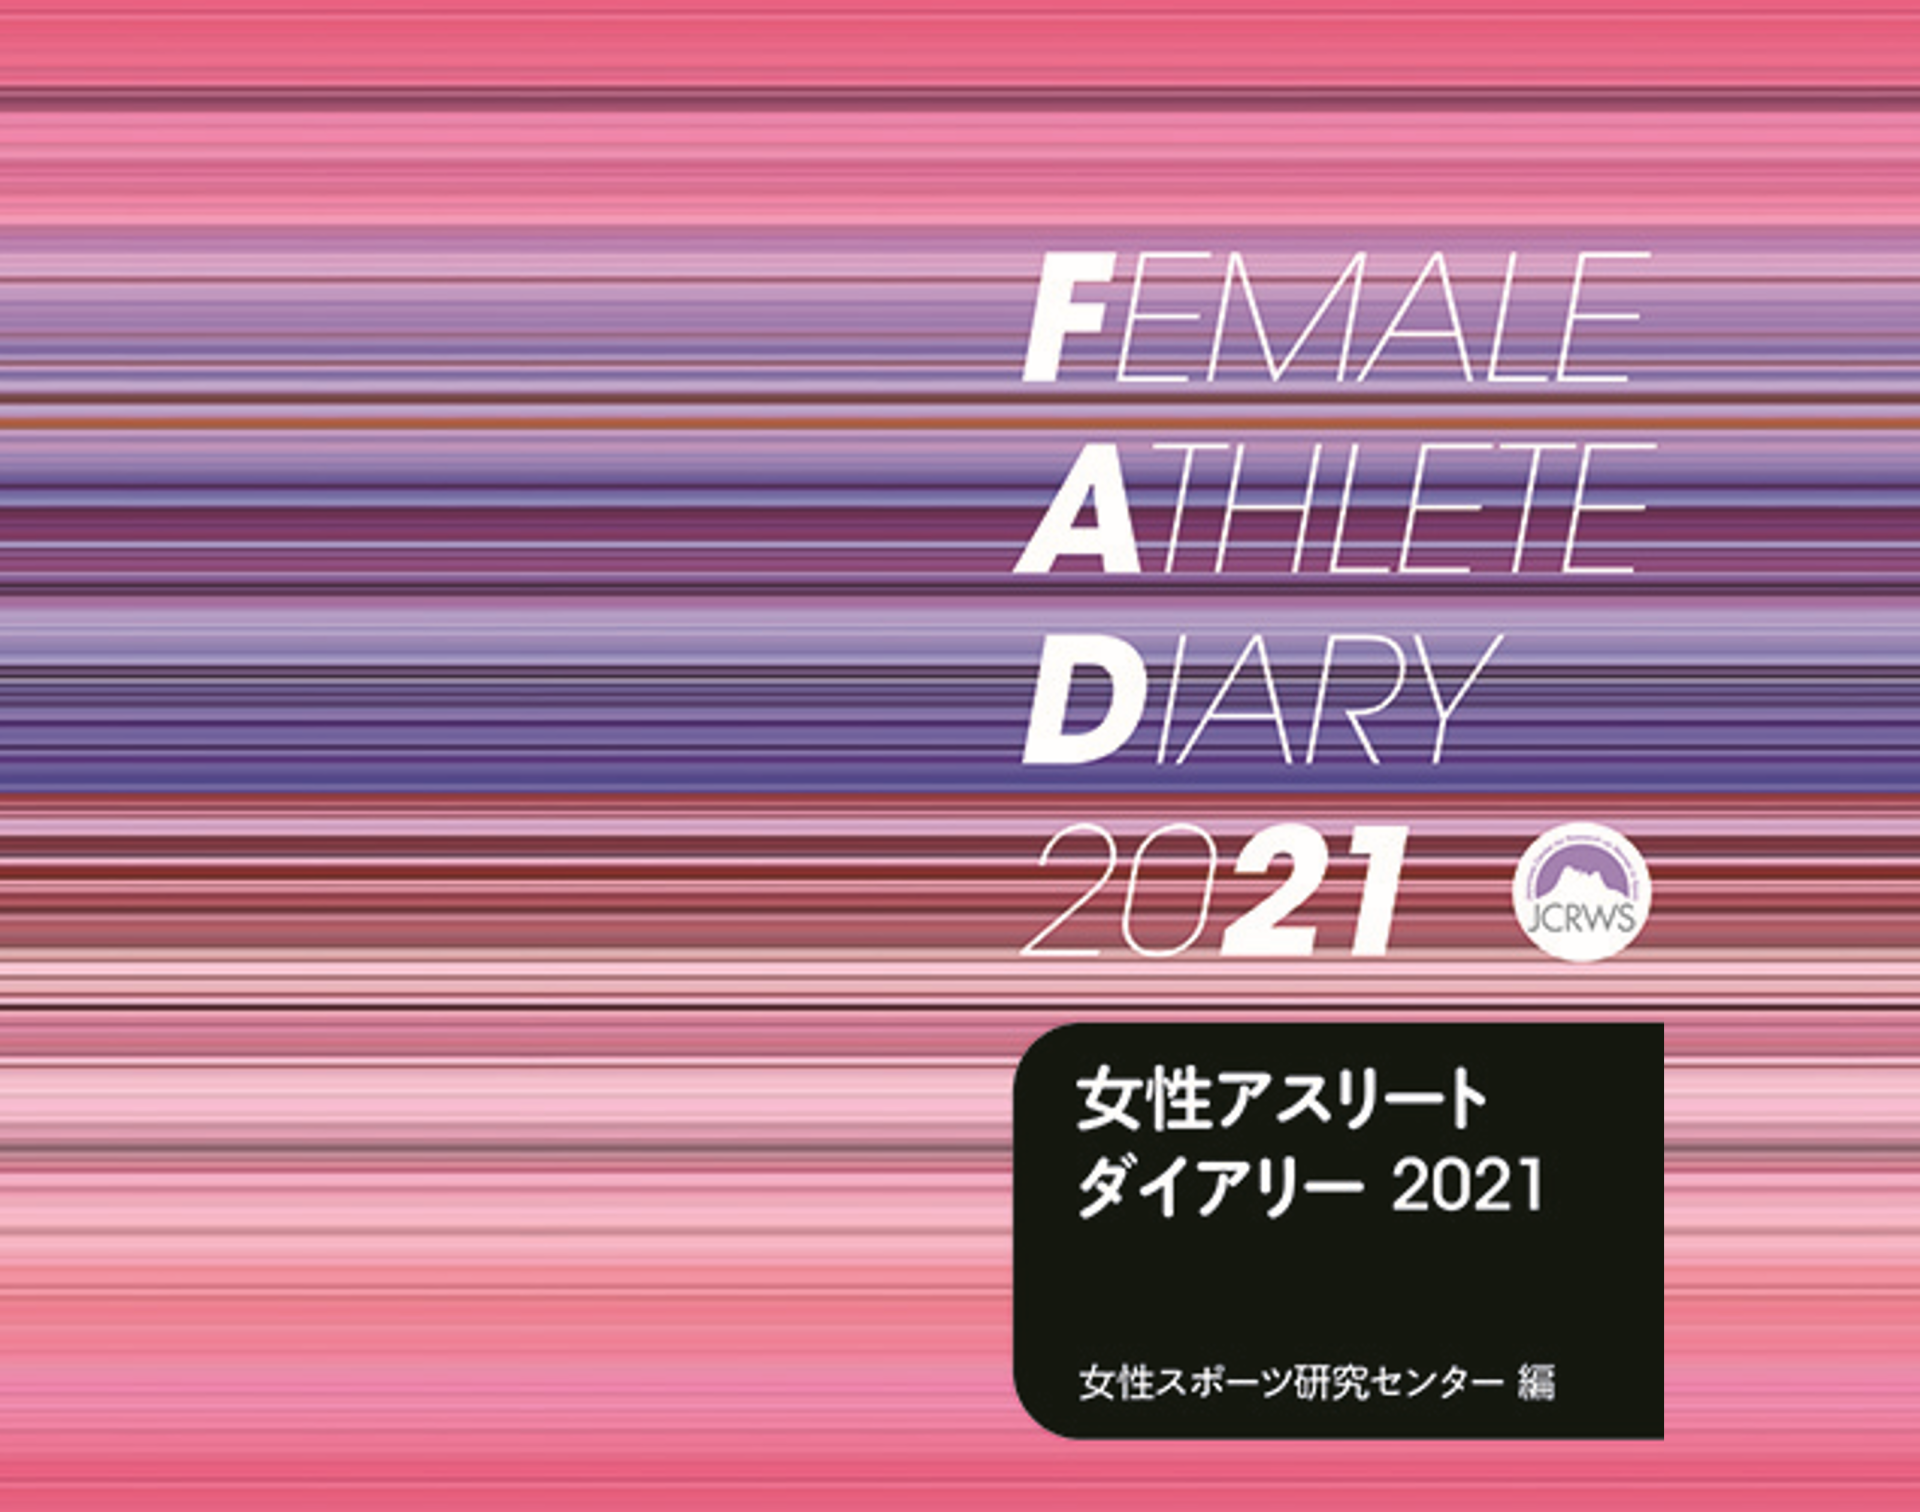 [Notice] Publishment of “Female Athlete Diary 2021”